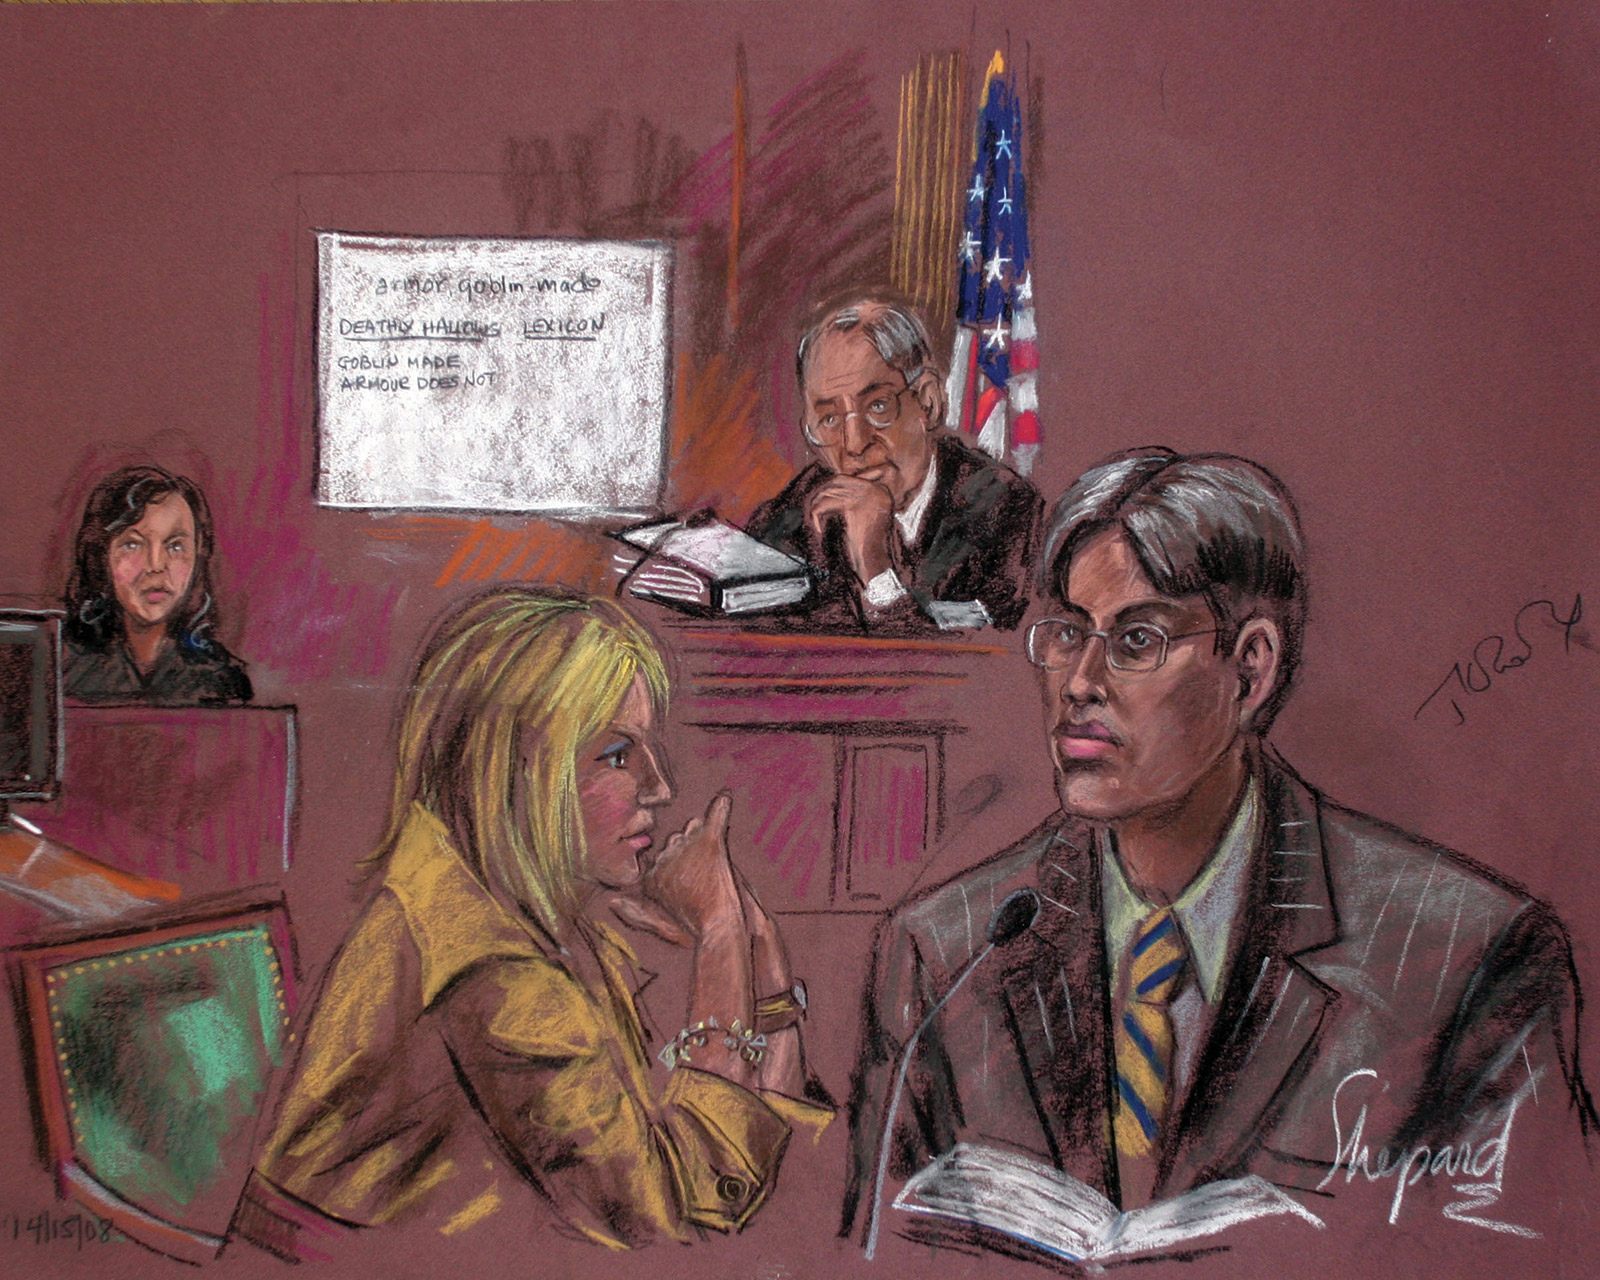 Court scene sketch